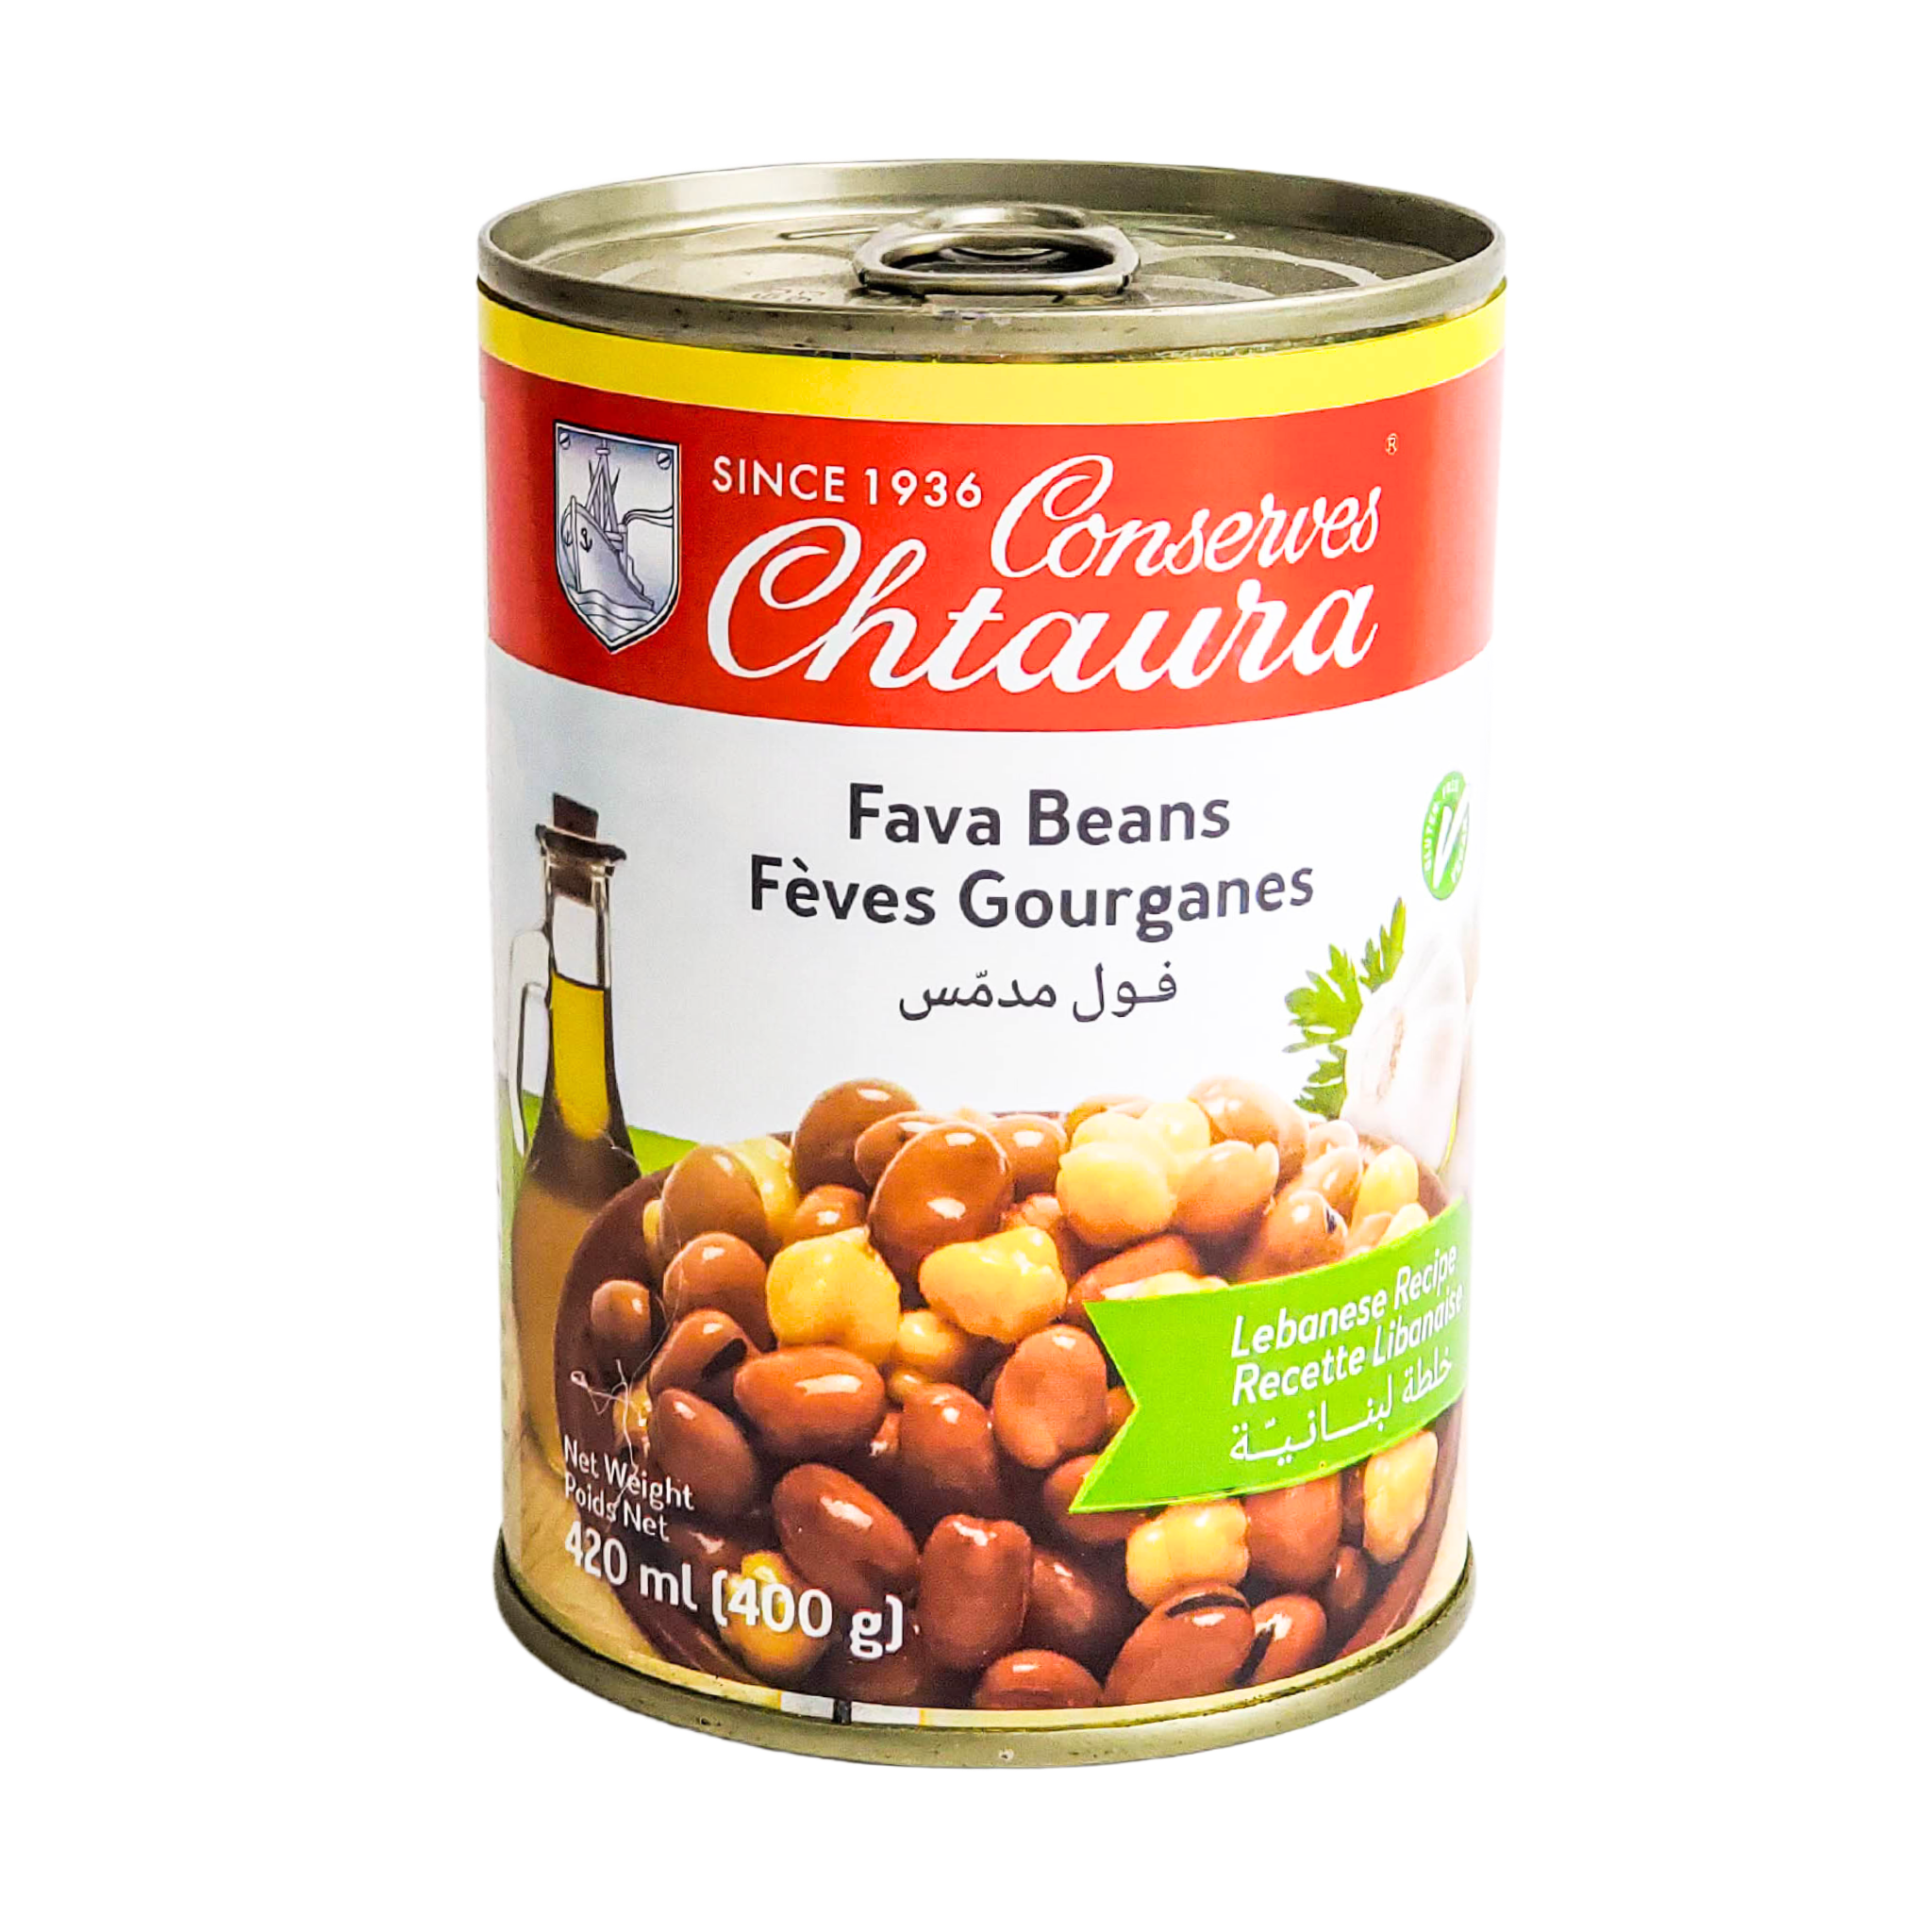 Conserves Chtaura Fava Beans 400 g